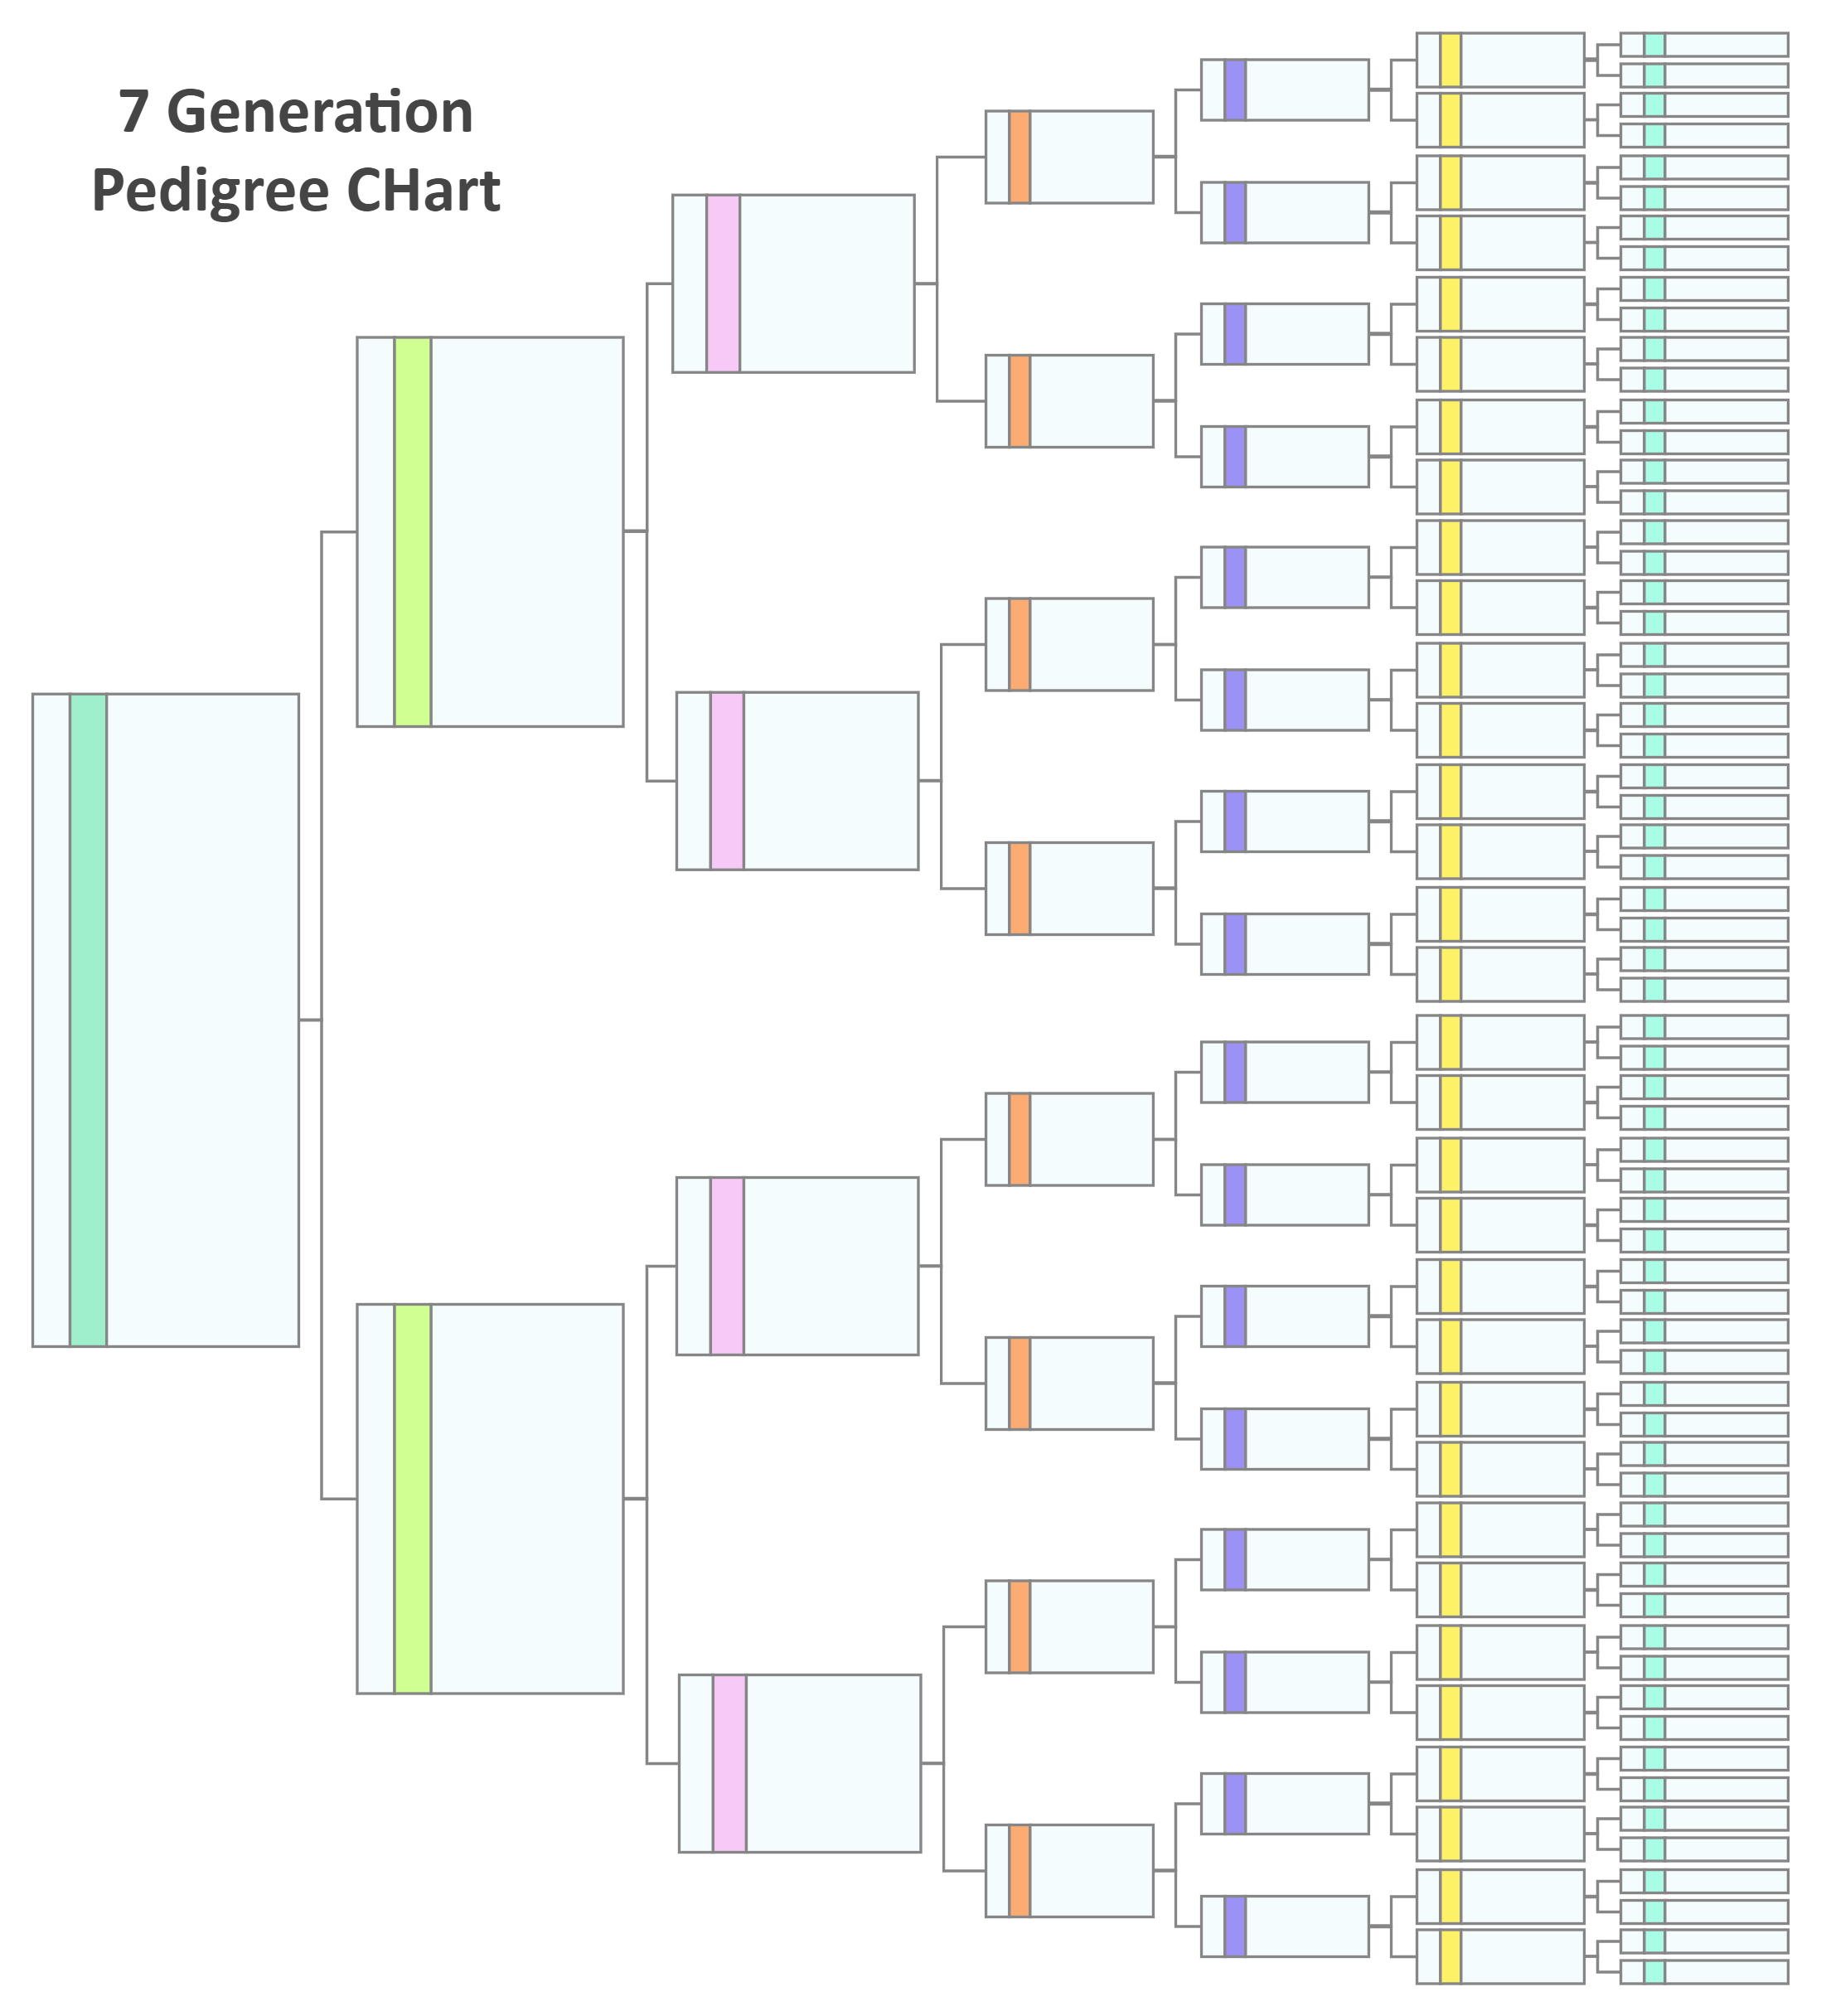 7 Generation Pedigree Chart